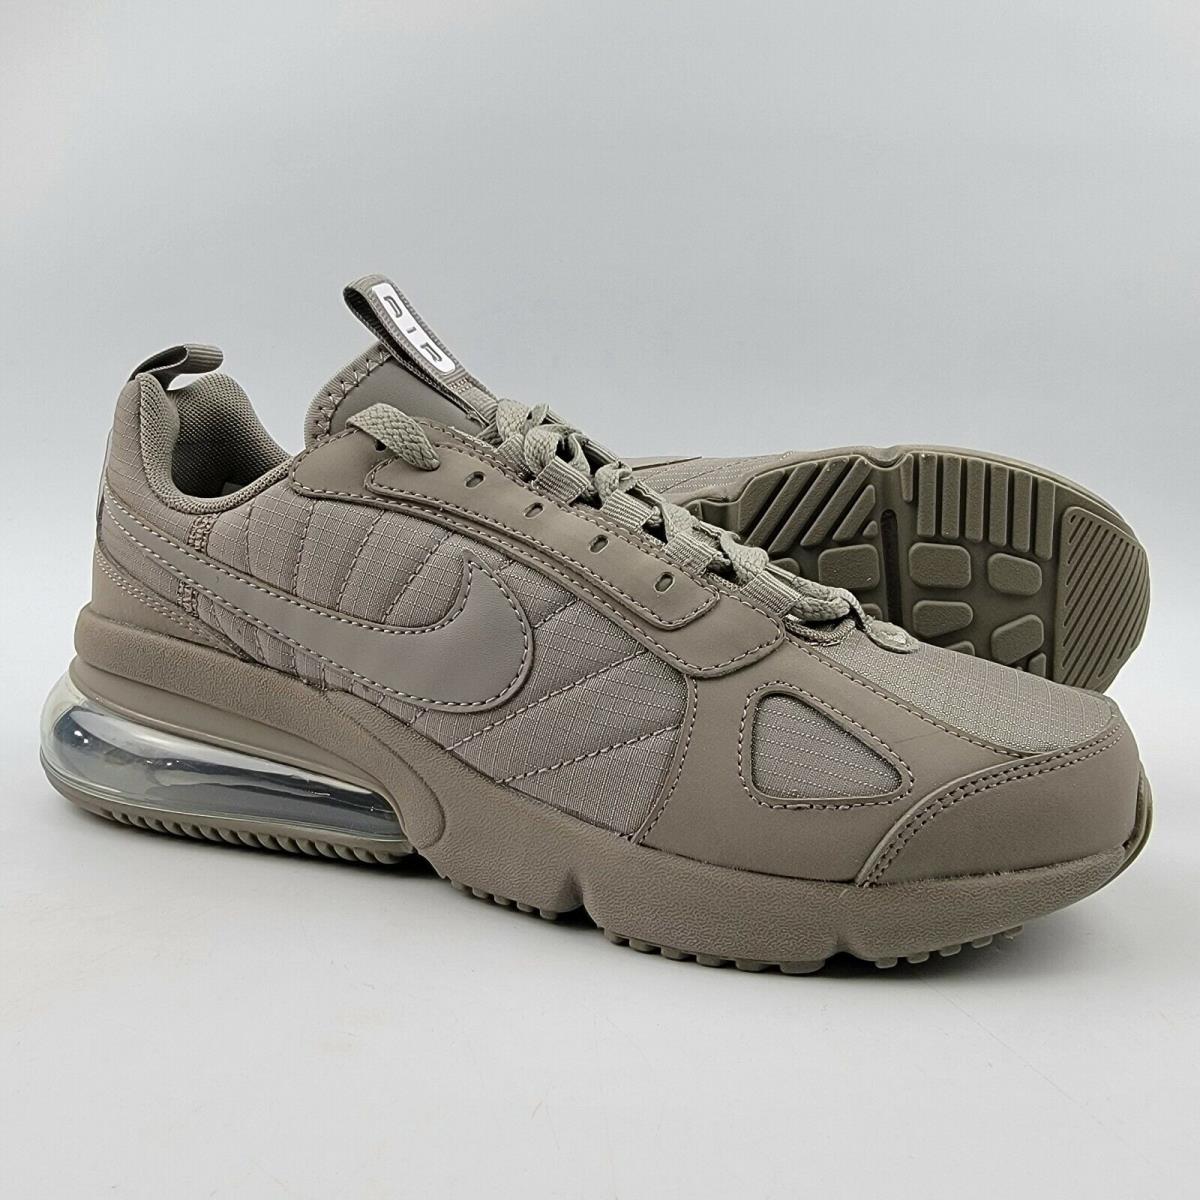 Nike Air Max 270 Futura Running Shoes Light Taupe AO1569-200 Mens 8 Womens 9.5